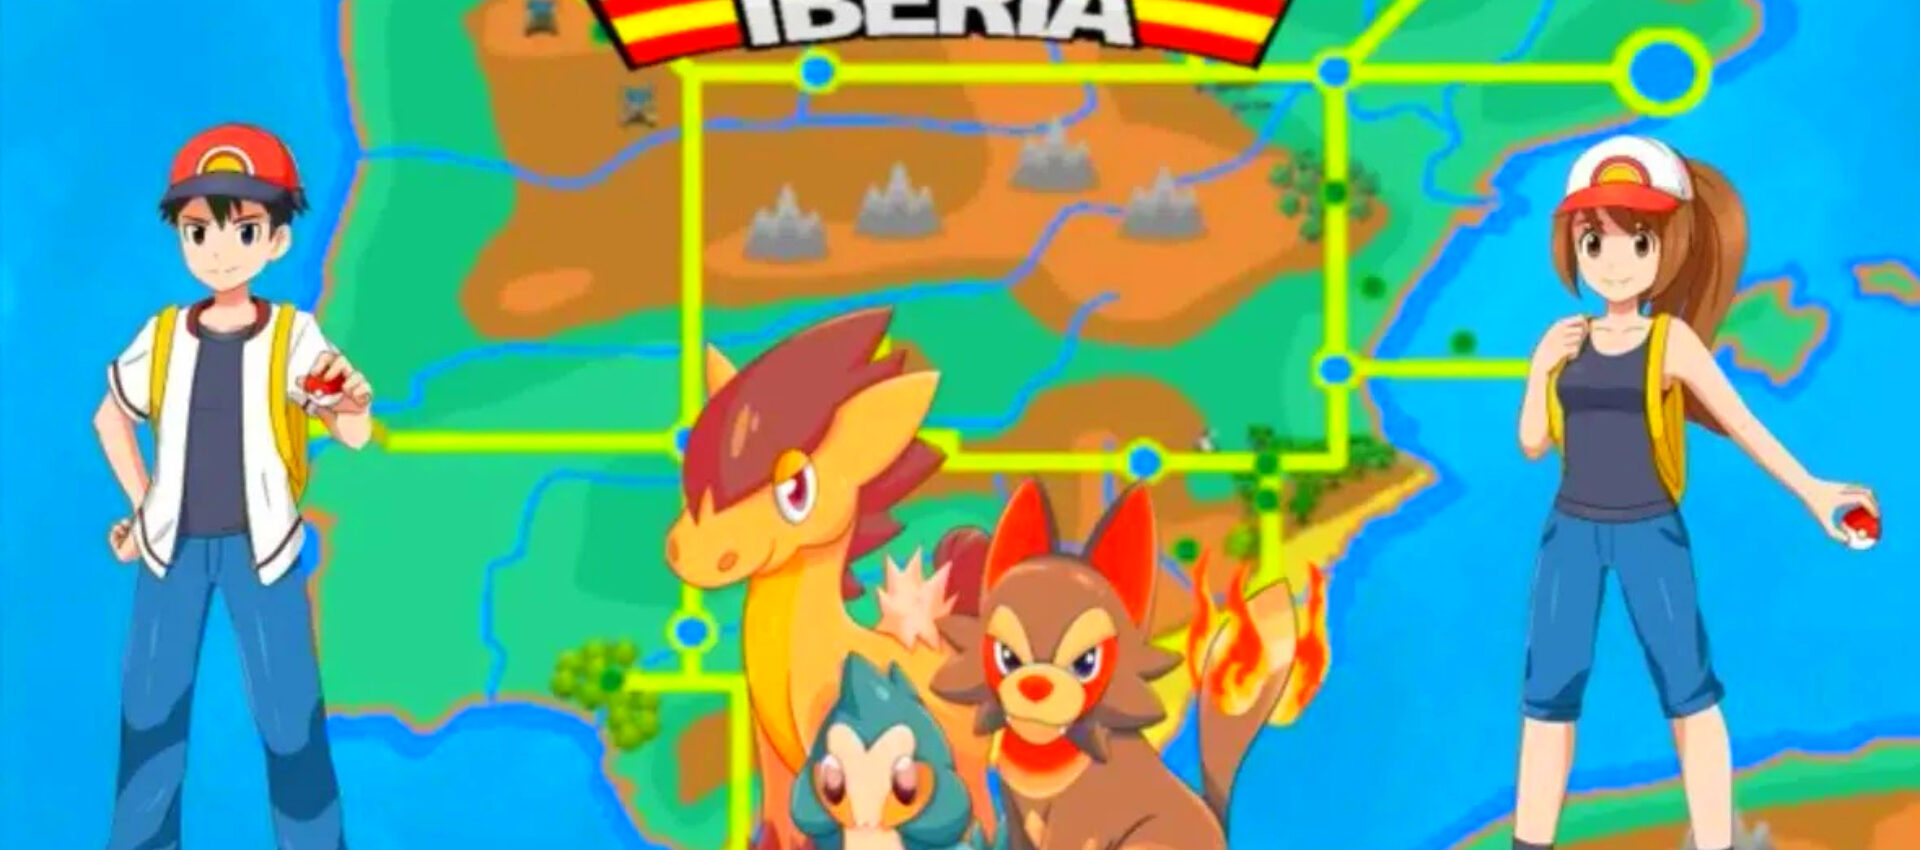 Pokémon Iberia Videojuegos retro